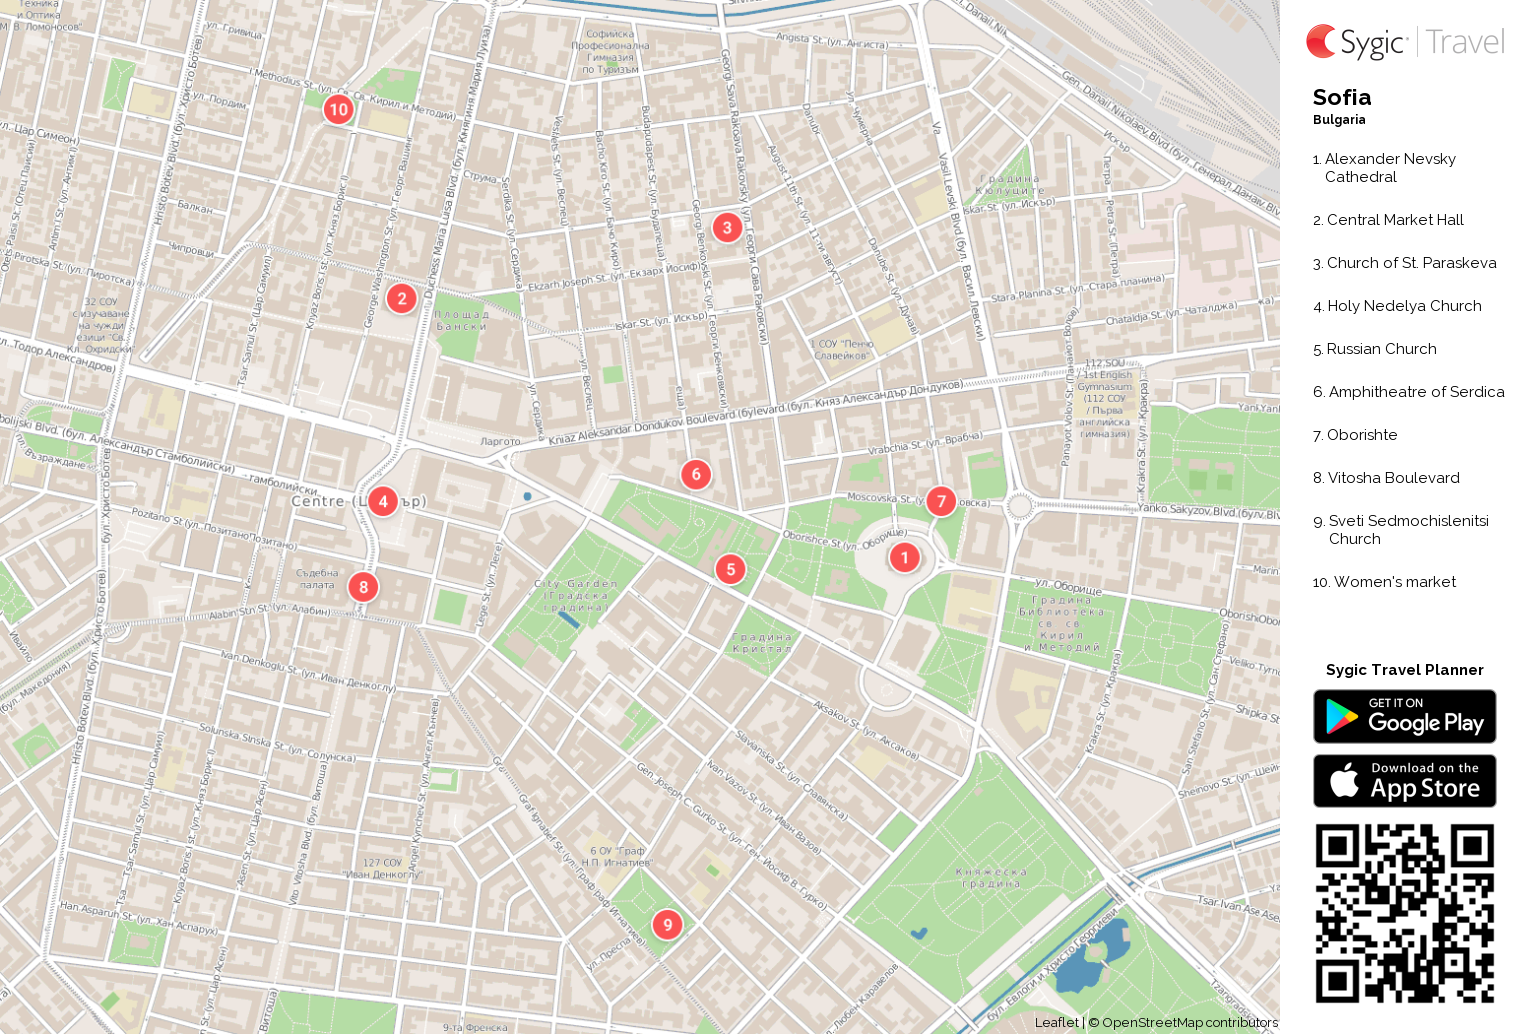 Sofia Printable Tourist Map | Sygic Travel